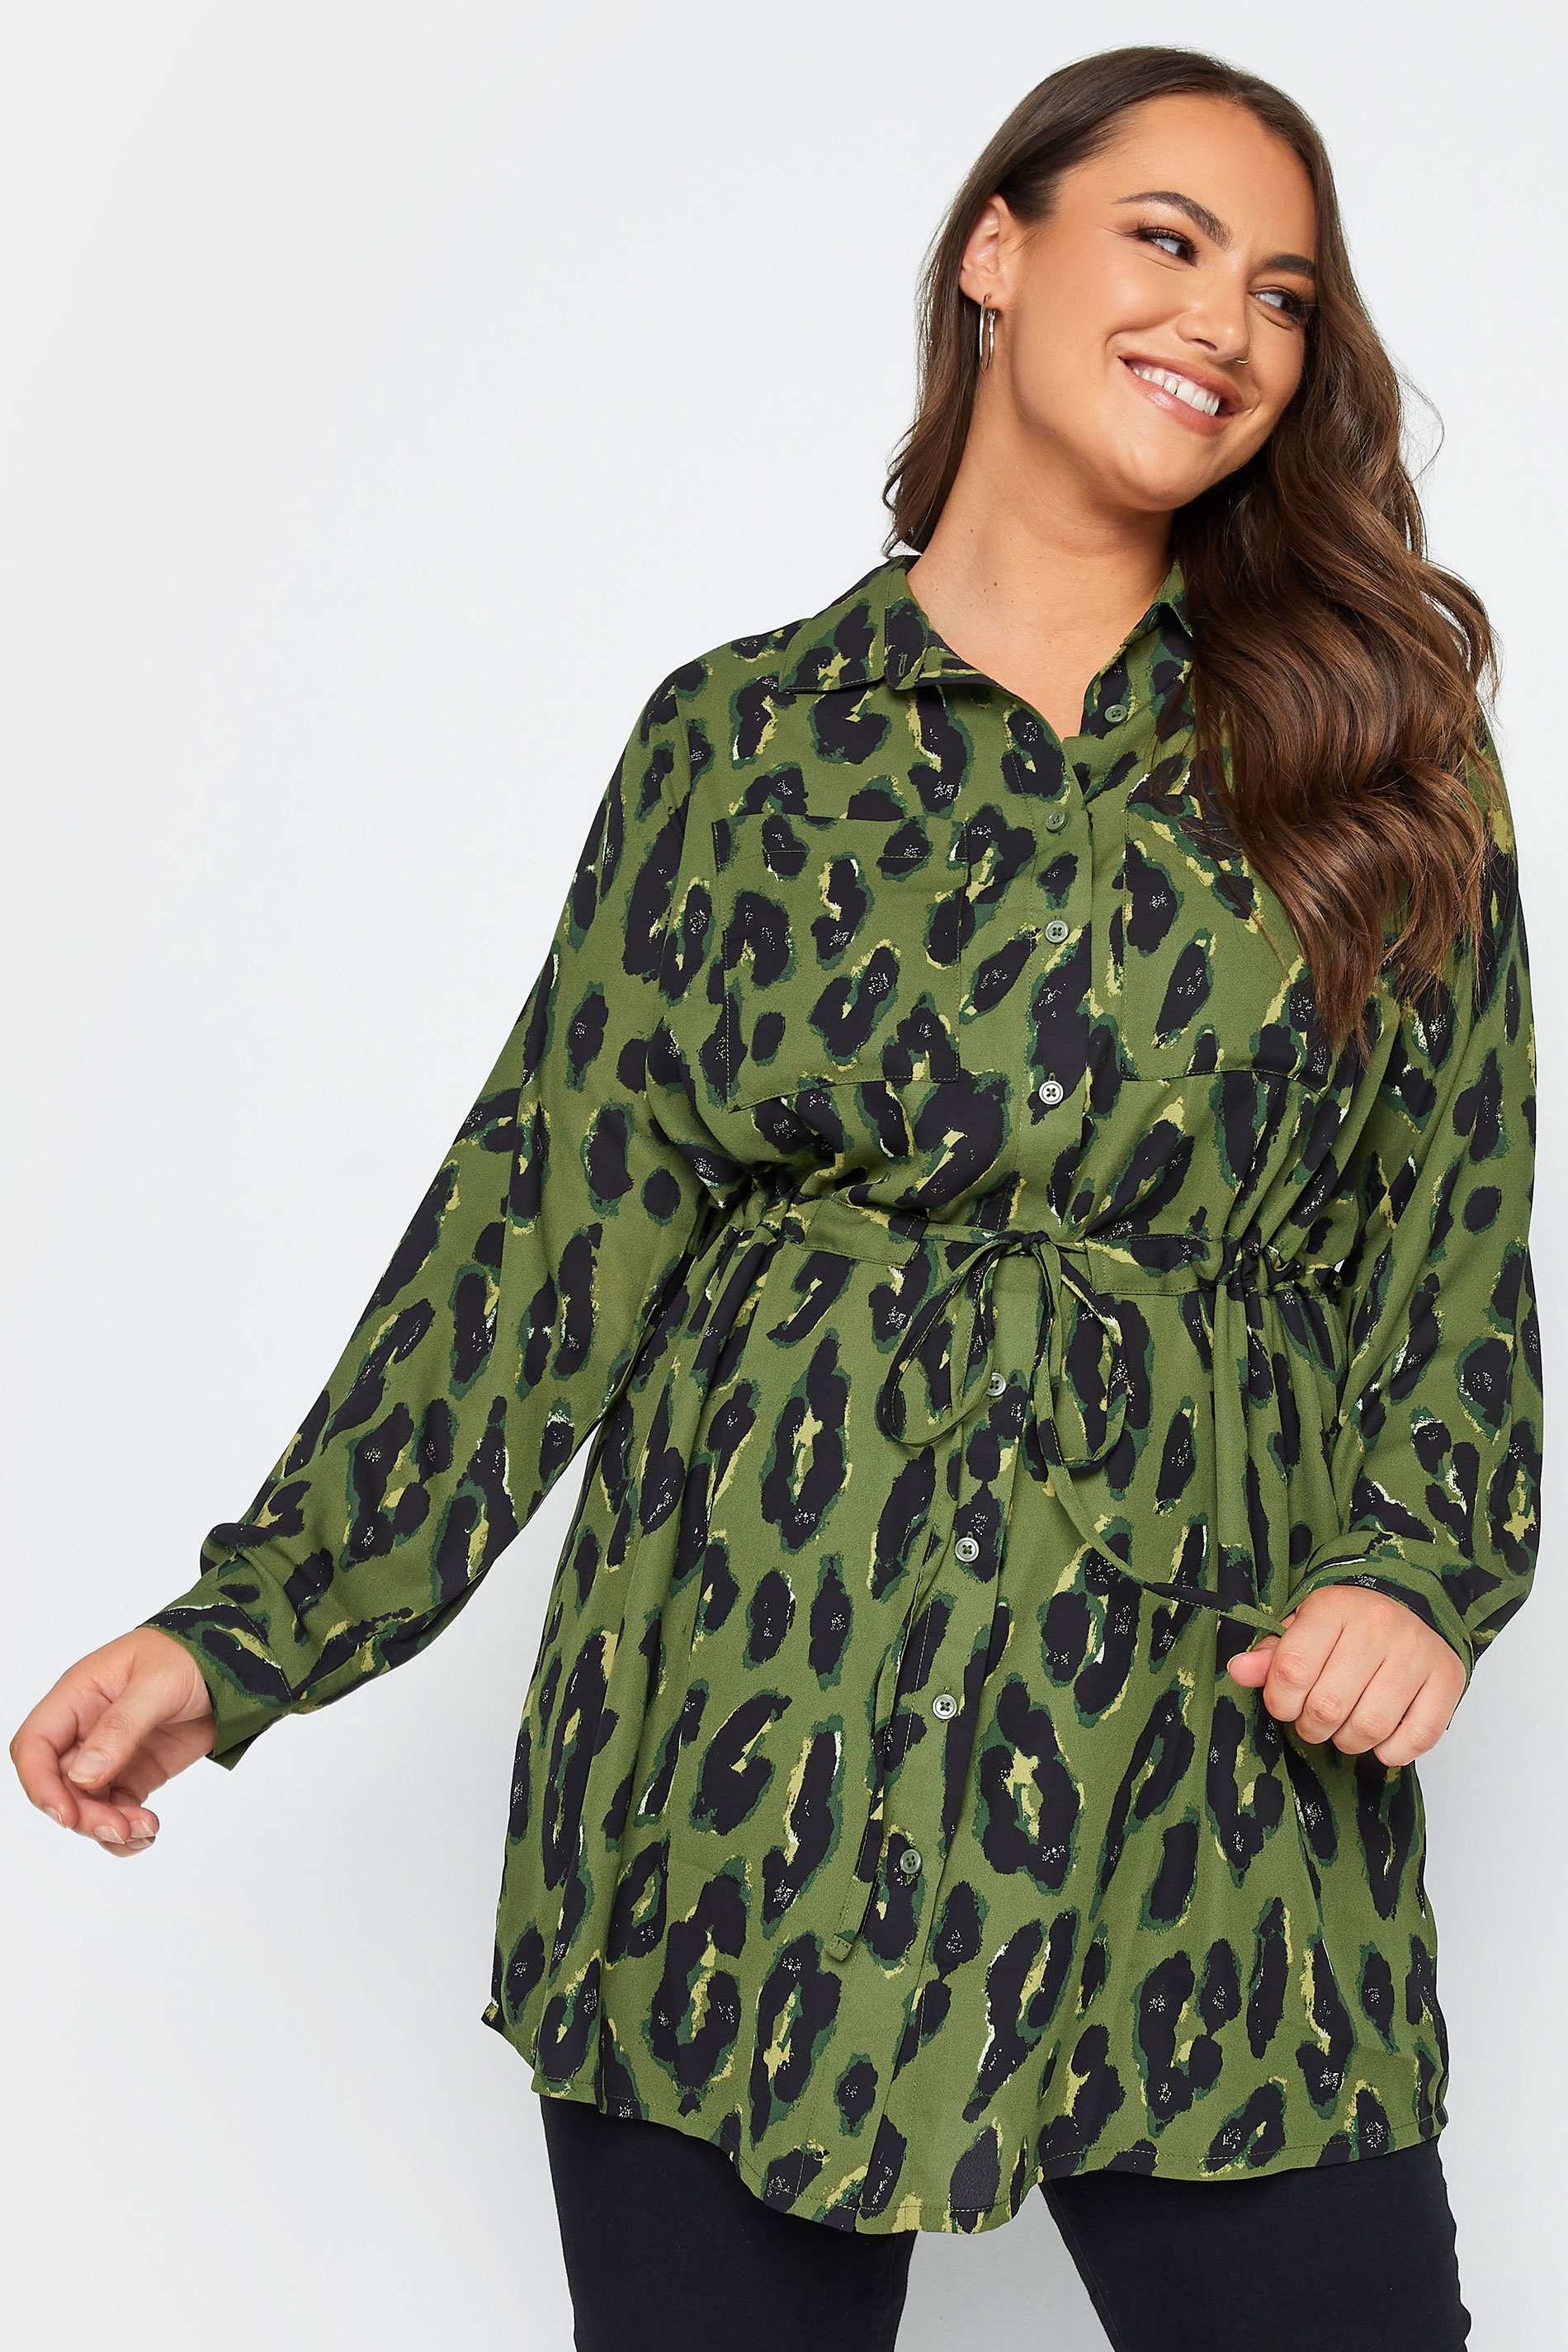 YOURS Plus Size Khaki Green Leopard Print Utility Tunic Shirt | Yours Clothing 1